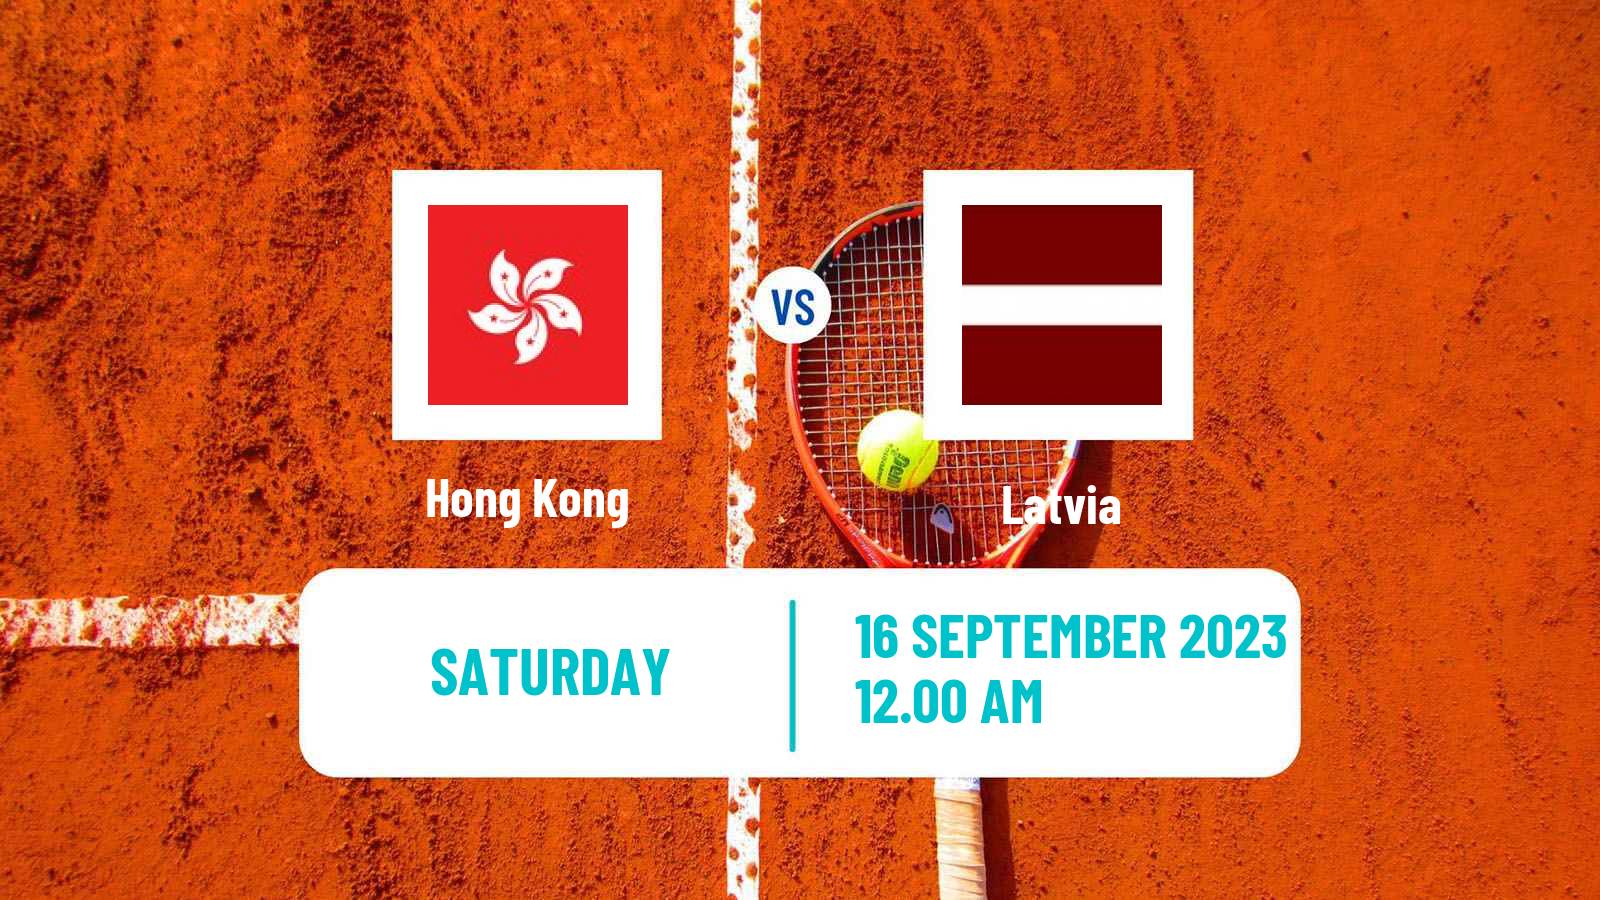 Tennis Davis Cup World Group II Teams Hong Kong - Latvia